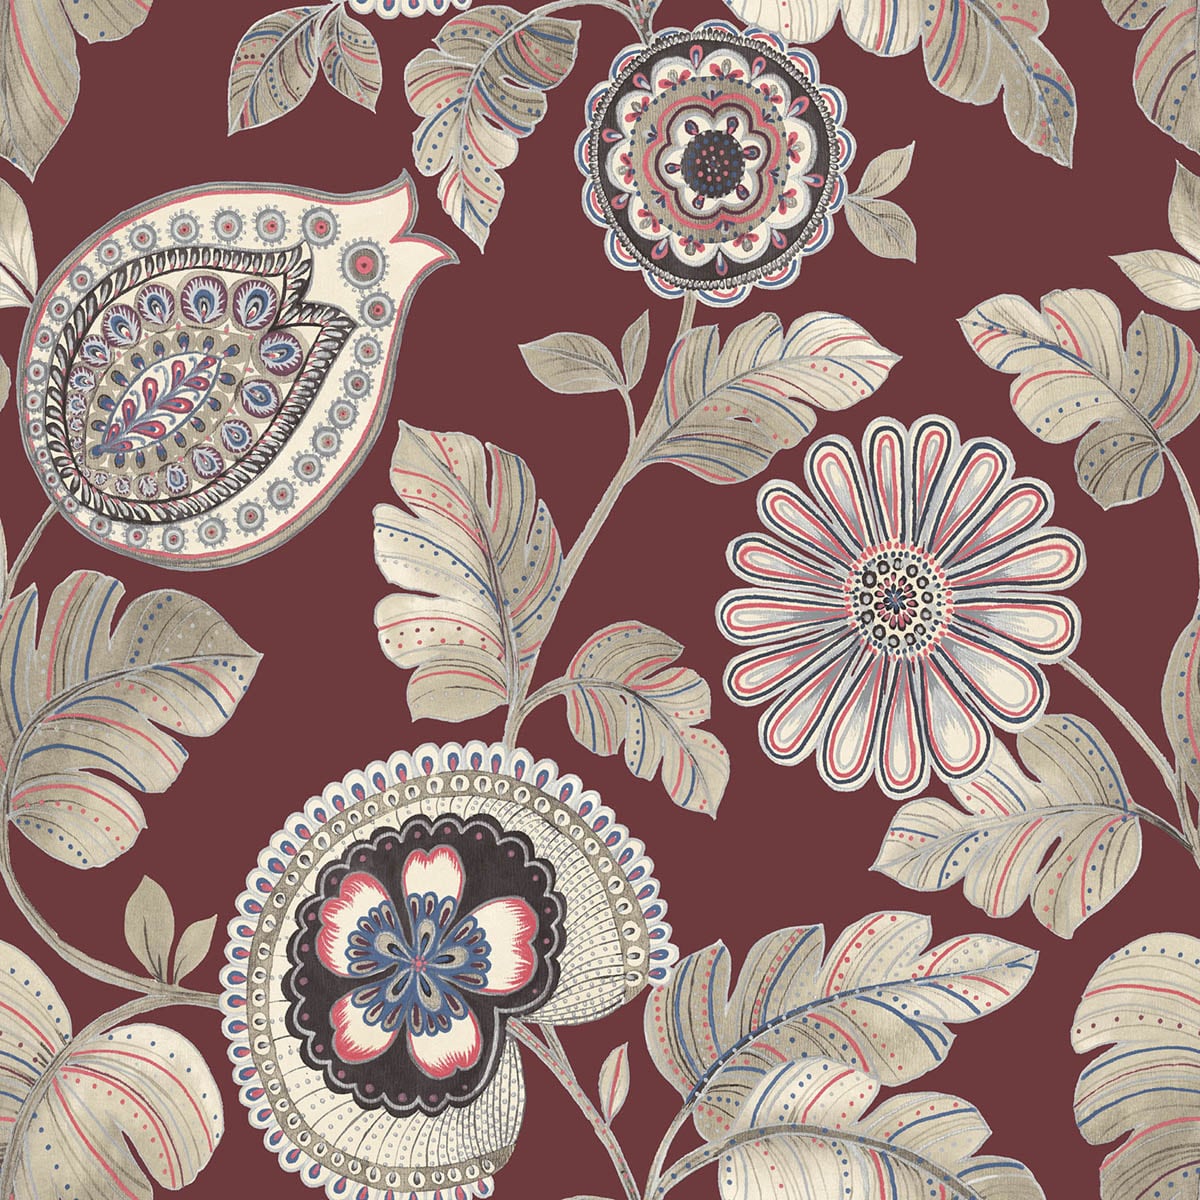 Seabrook Designs RY31201 Boho Rhapsody Calypso Paisley Leaf  Wallpaper Cabernet and Coral